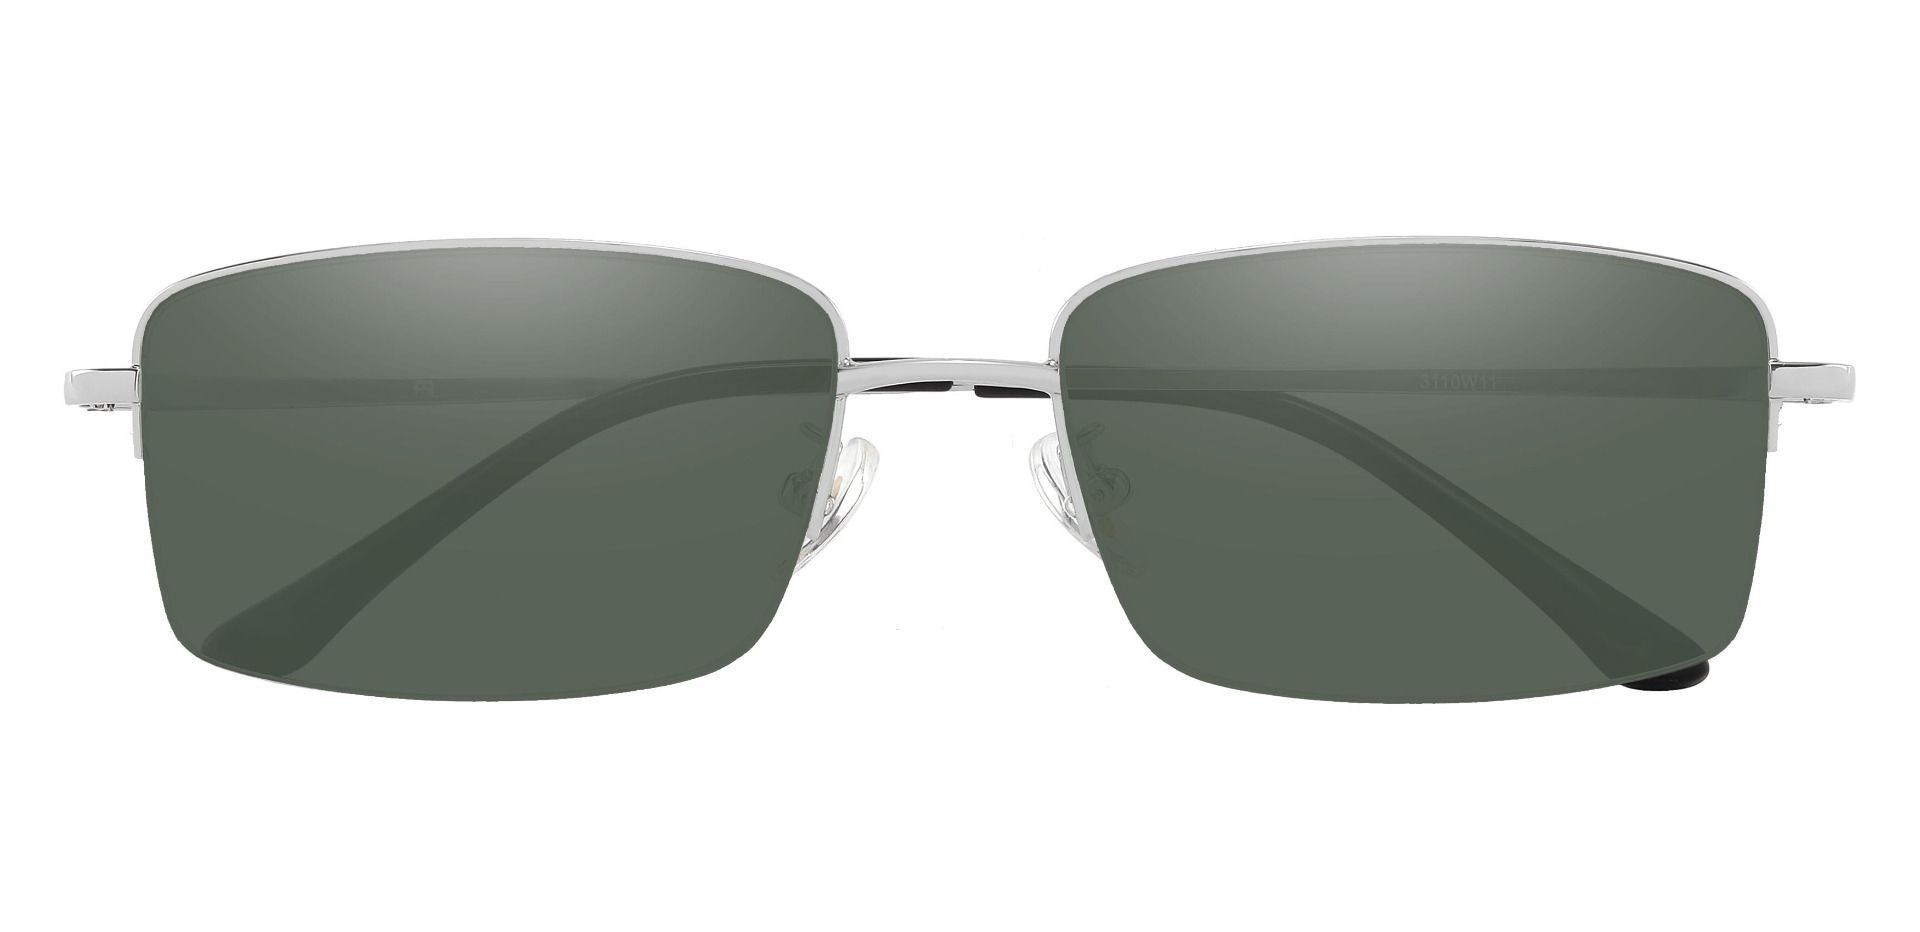 Bellmont Rectangle Progressive Sunglasses - Silver Frame With Green Lenses